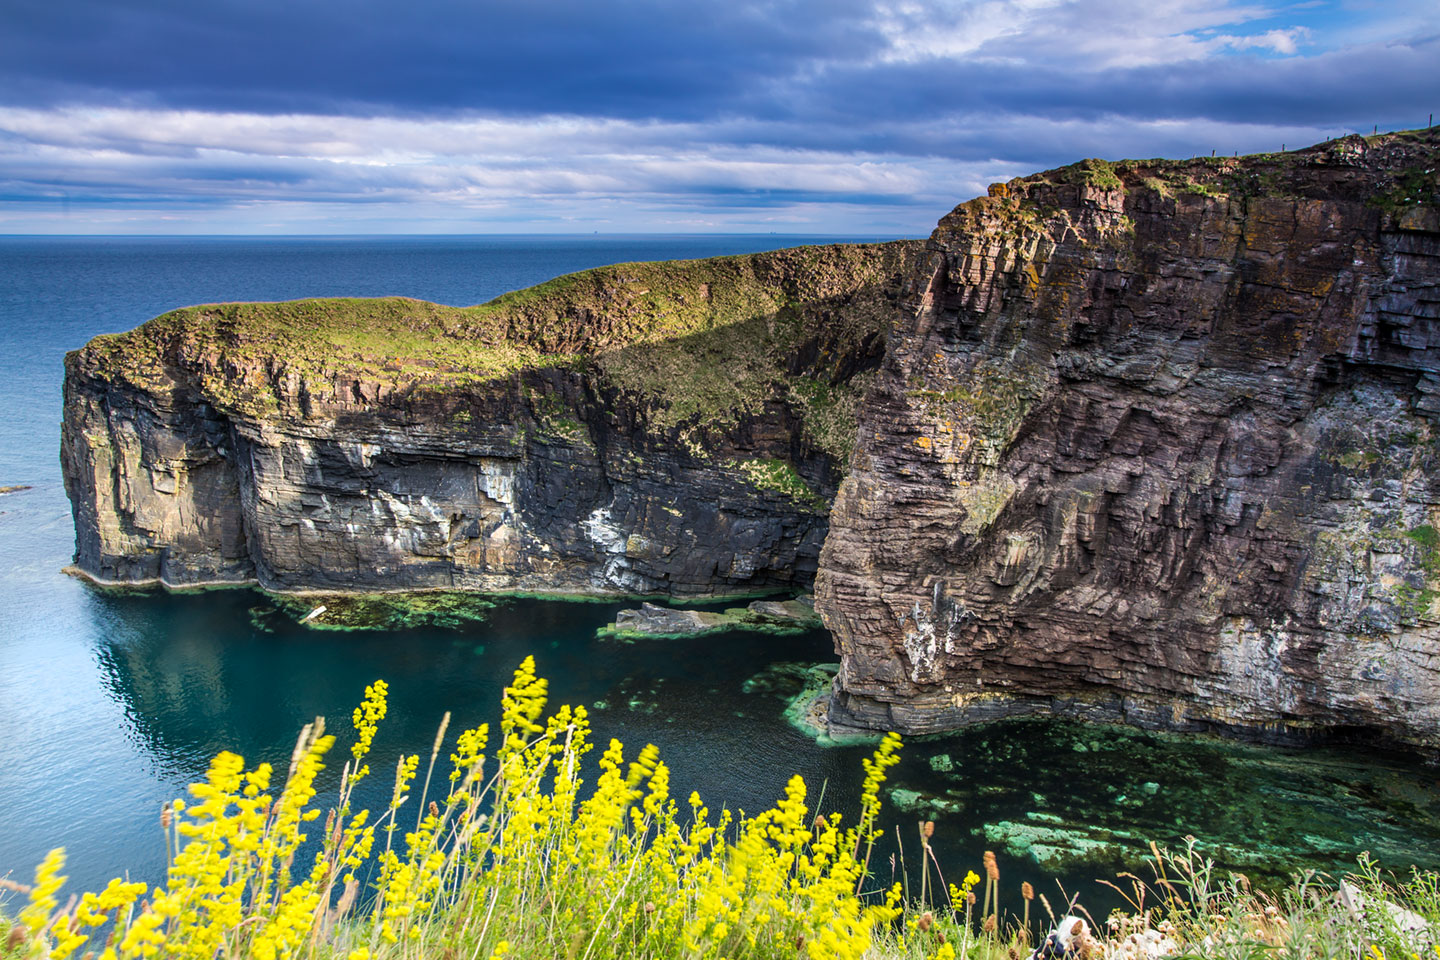 Whaligoe cliffs in Scotland